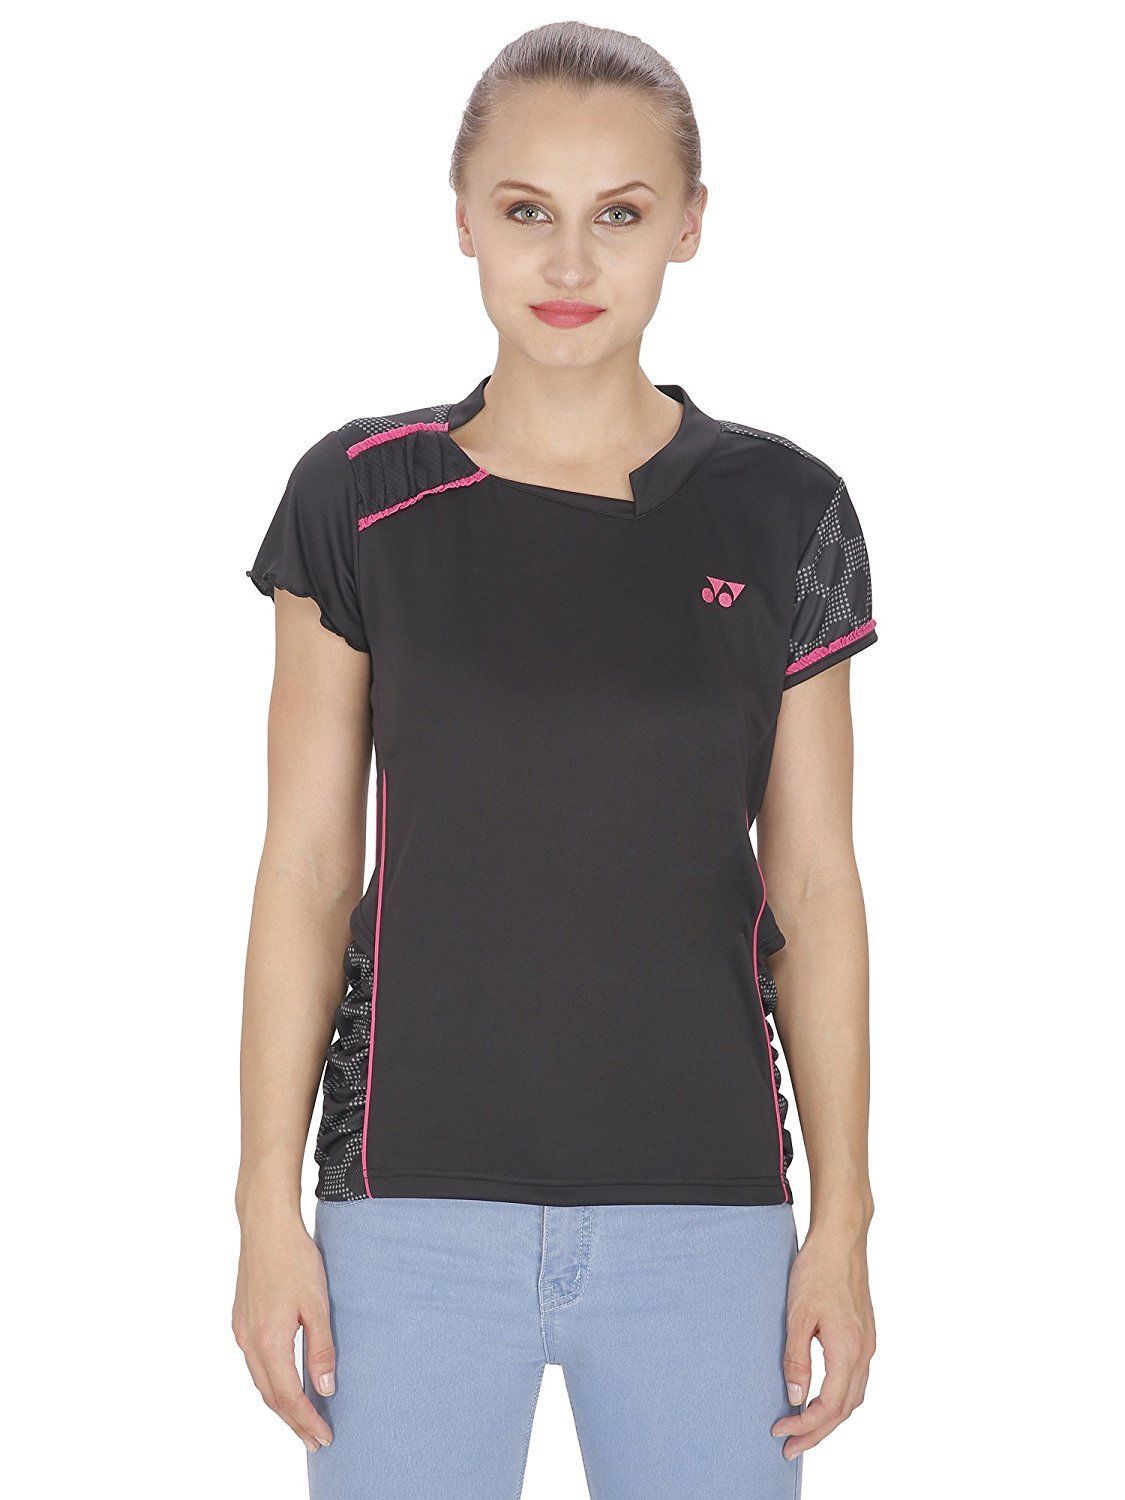 Yonex Badminton Women's Tshirt's RL6-20210-Jet Black - Buy Yonex ...